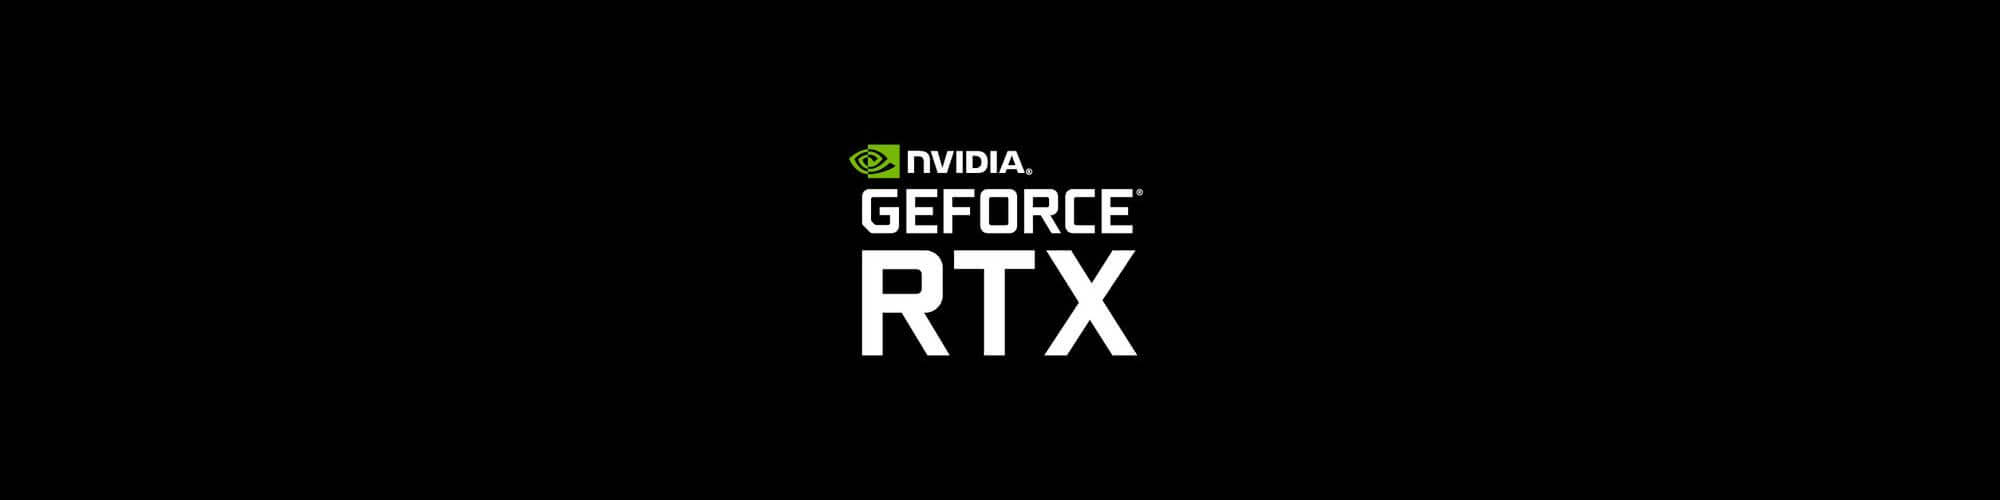  NVIDIA      GeForce RTX      !!